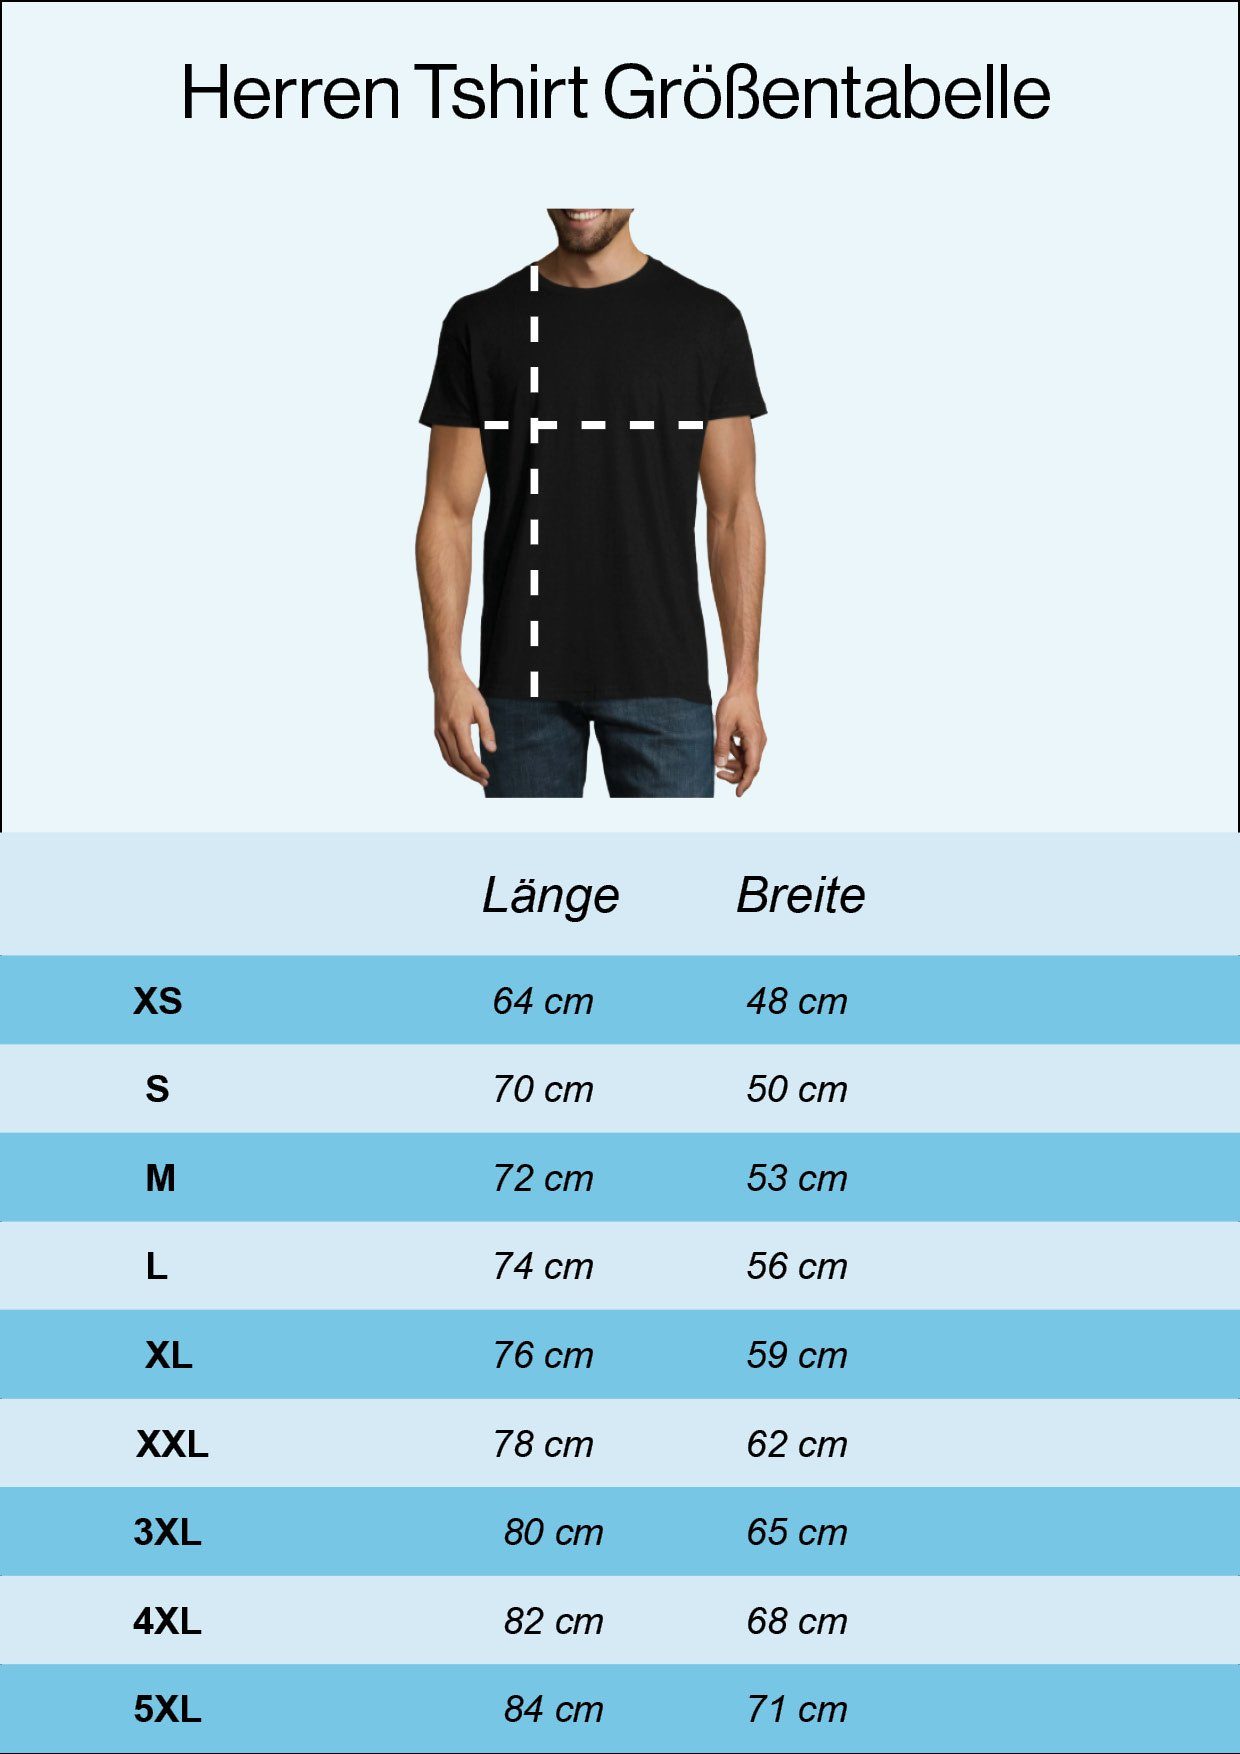 Youth Heartbeat Shirt Herren Frontprint mit Traktor T-Shirt trendigem Navyblau Designz